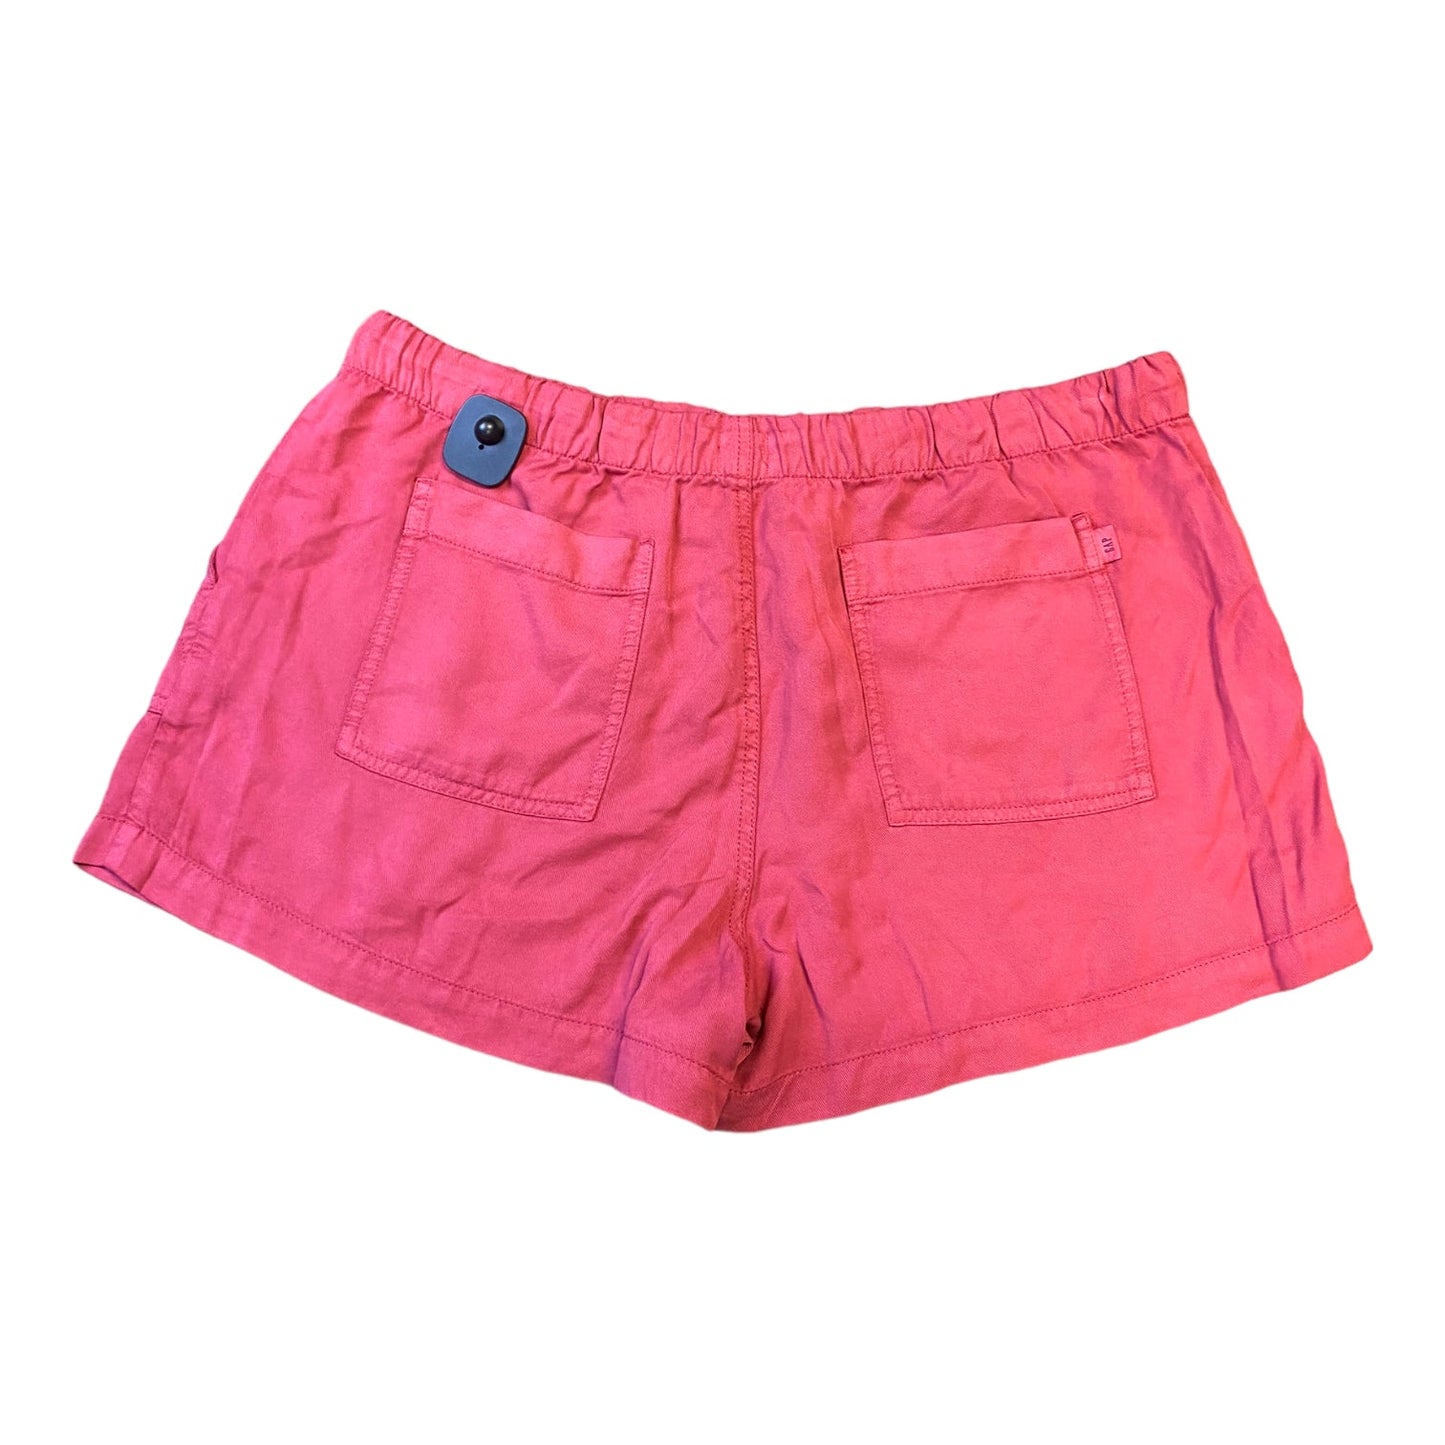 Shorts By Gap  Size: Xl